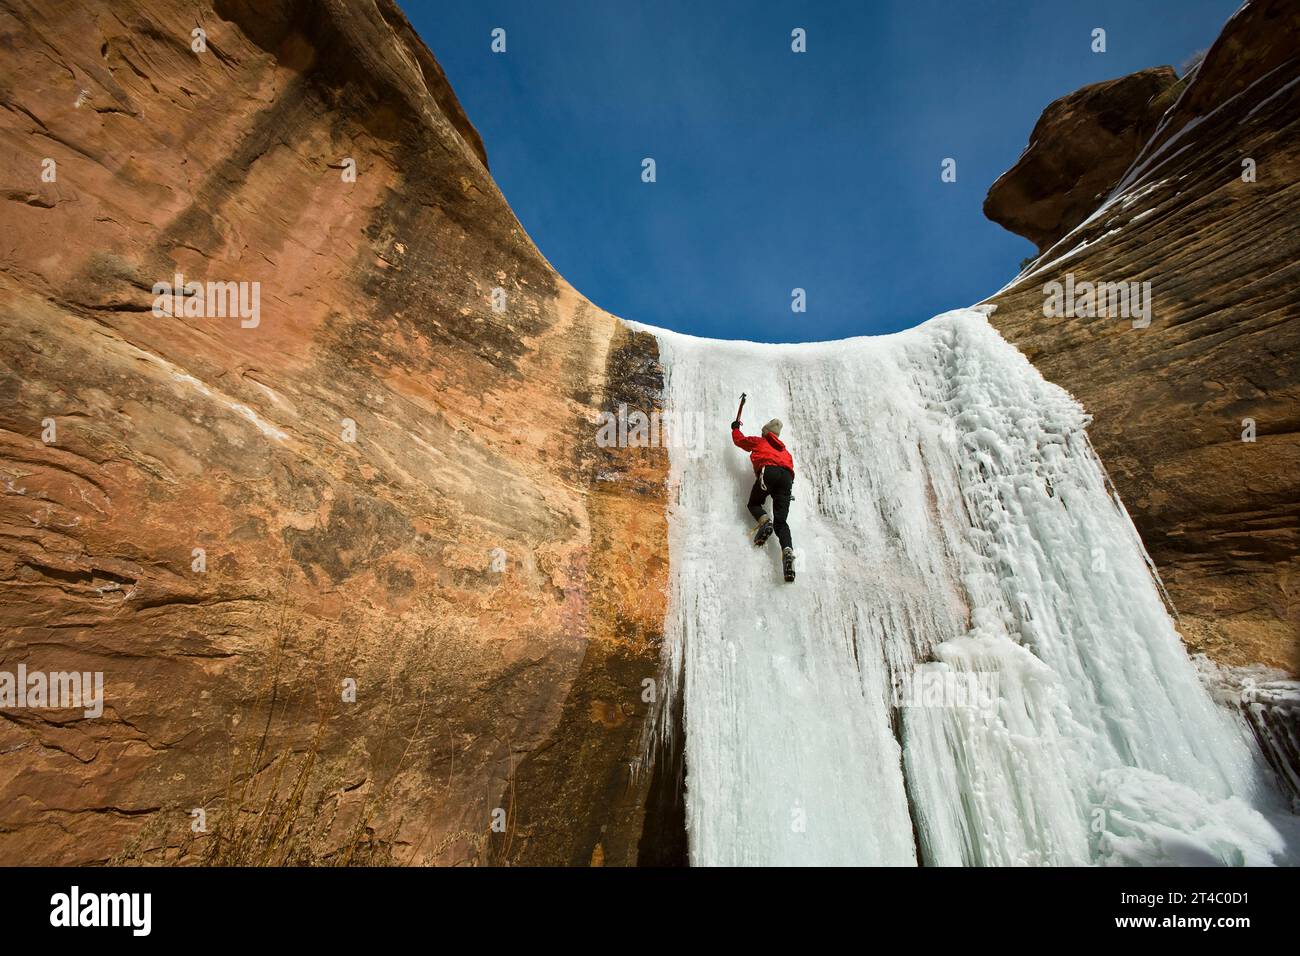 A man ice climbing a frozen waterfall in Utah. Stock Photo